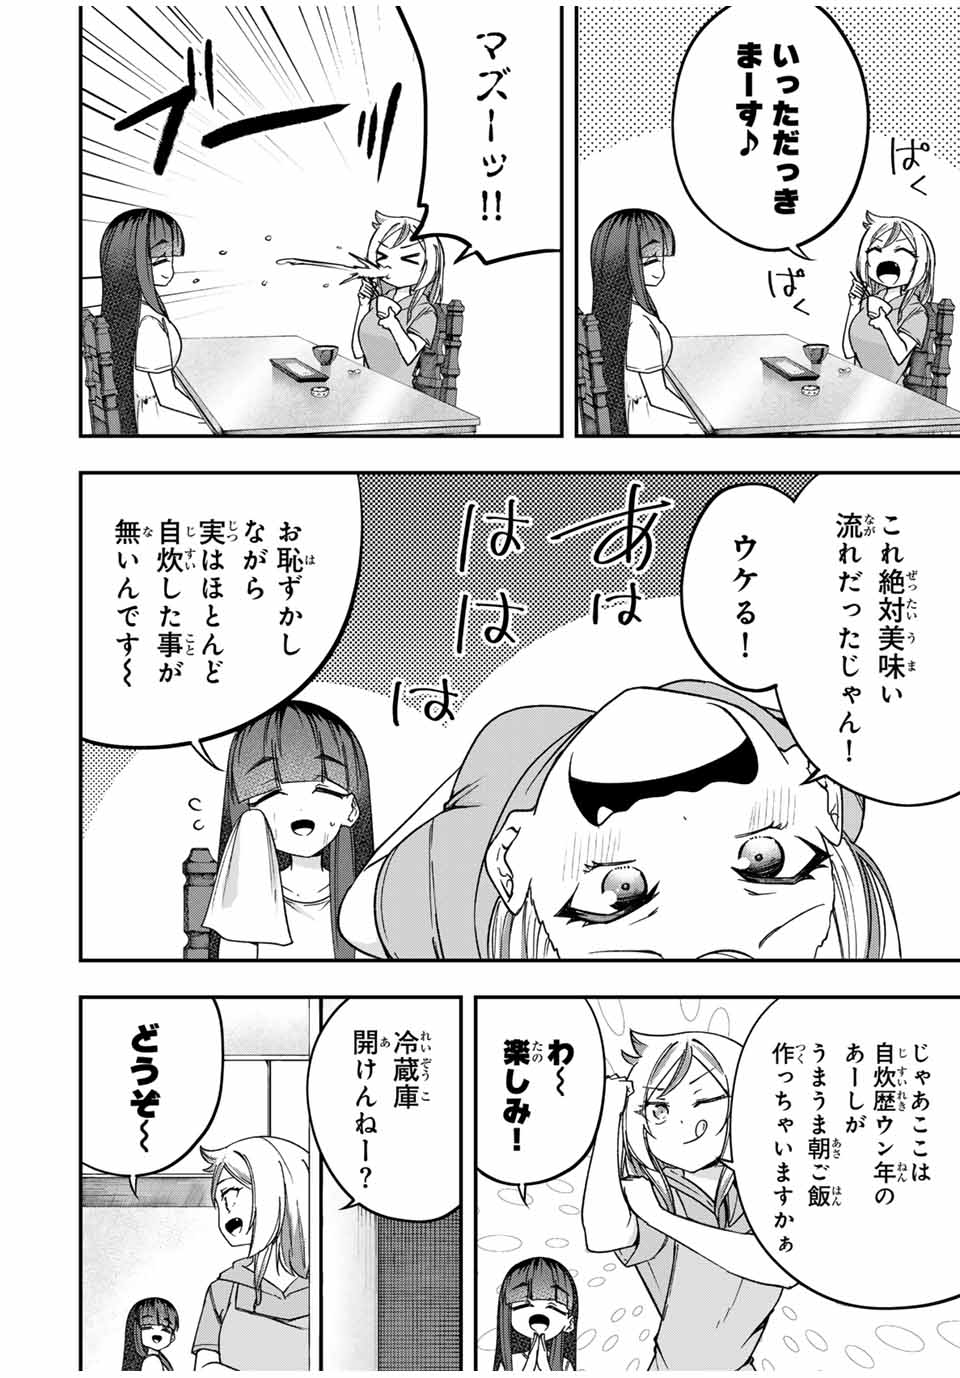 Heroine wa xx Okasegitai - Chapter 7 - Page 6